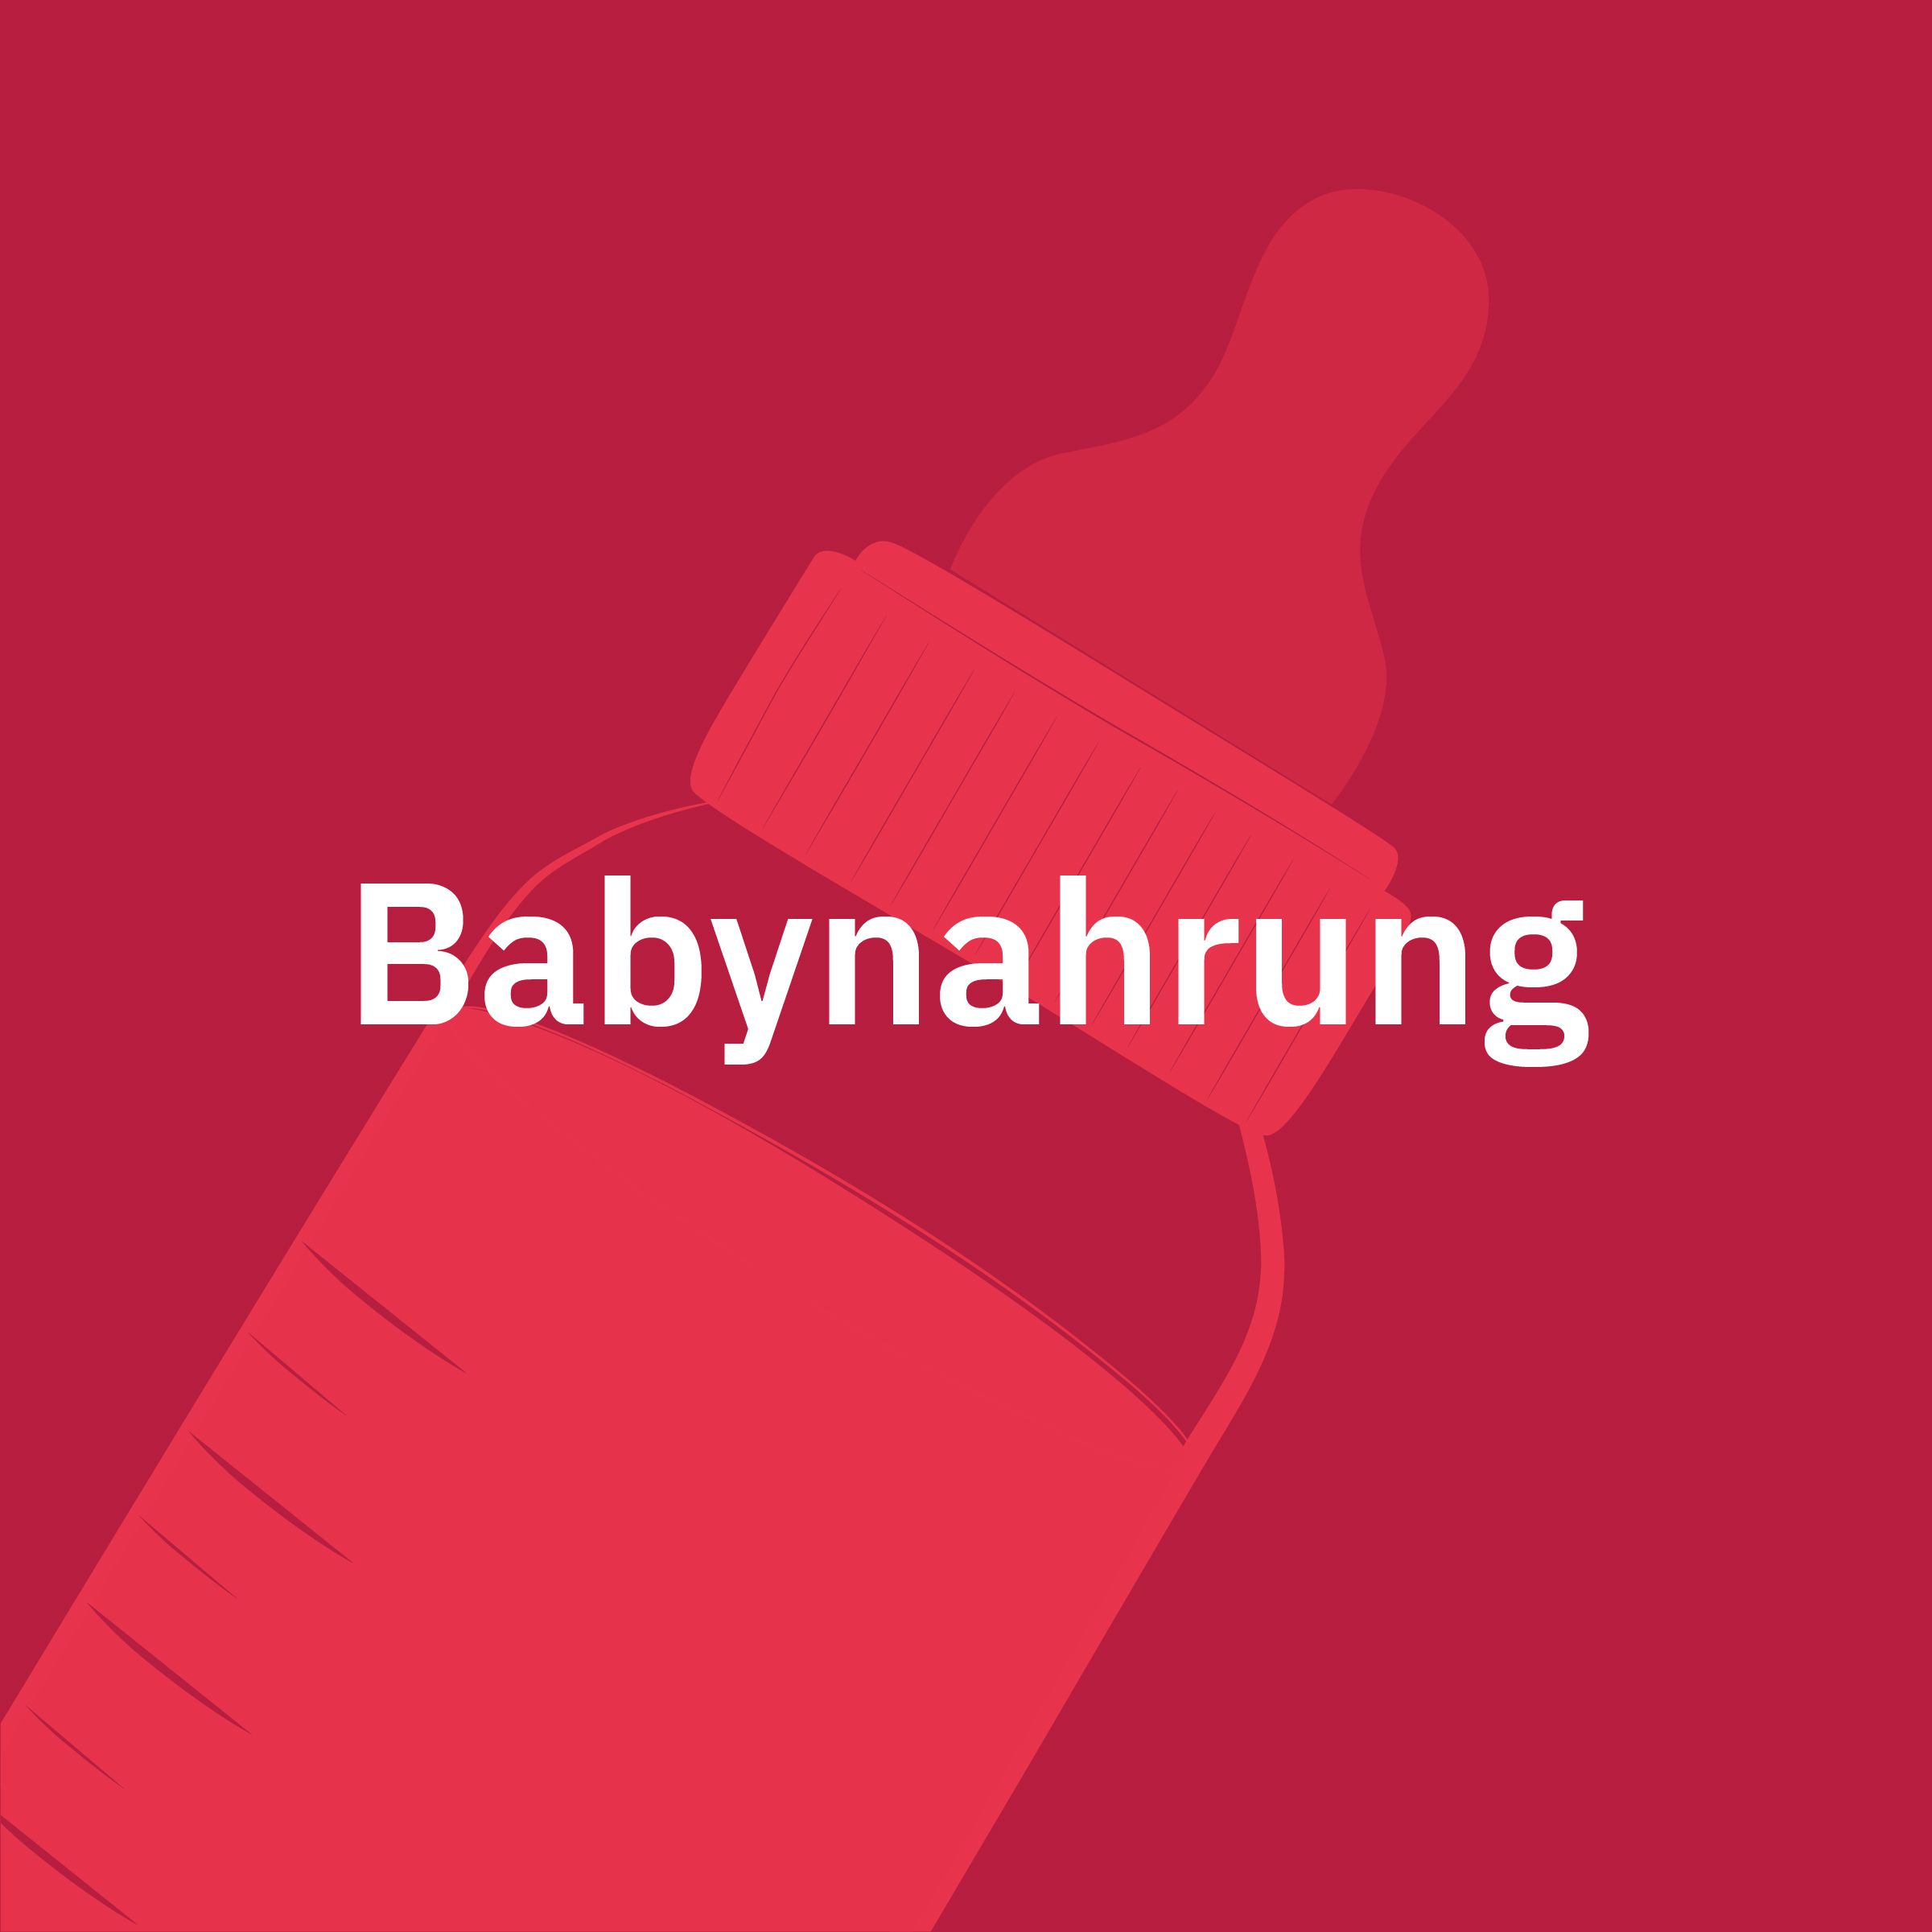 Babynahrung